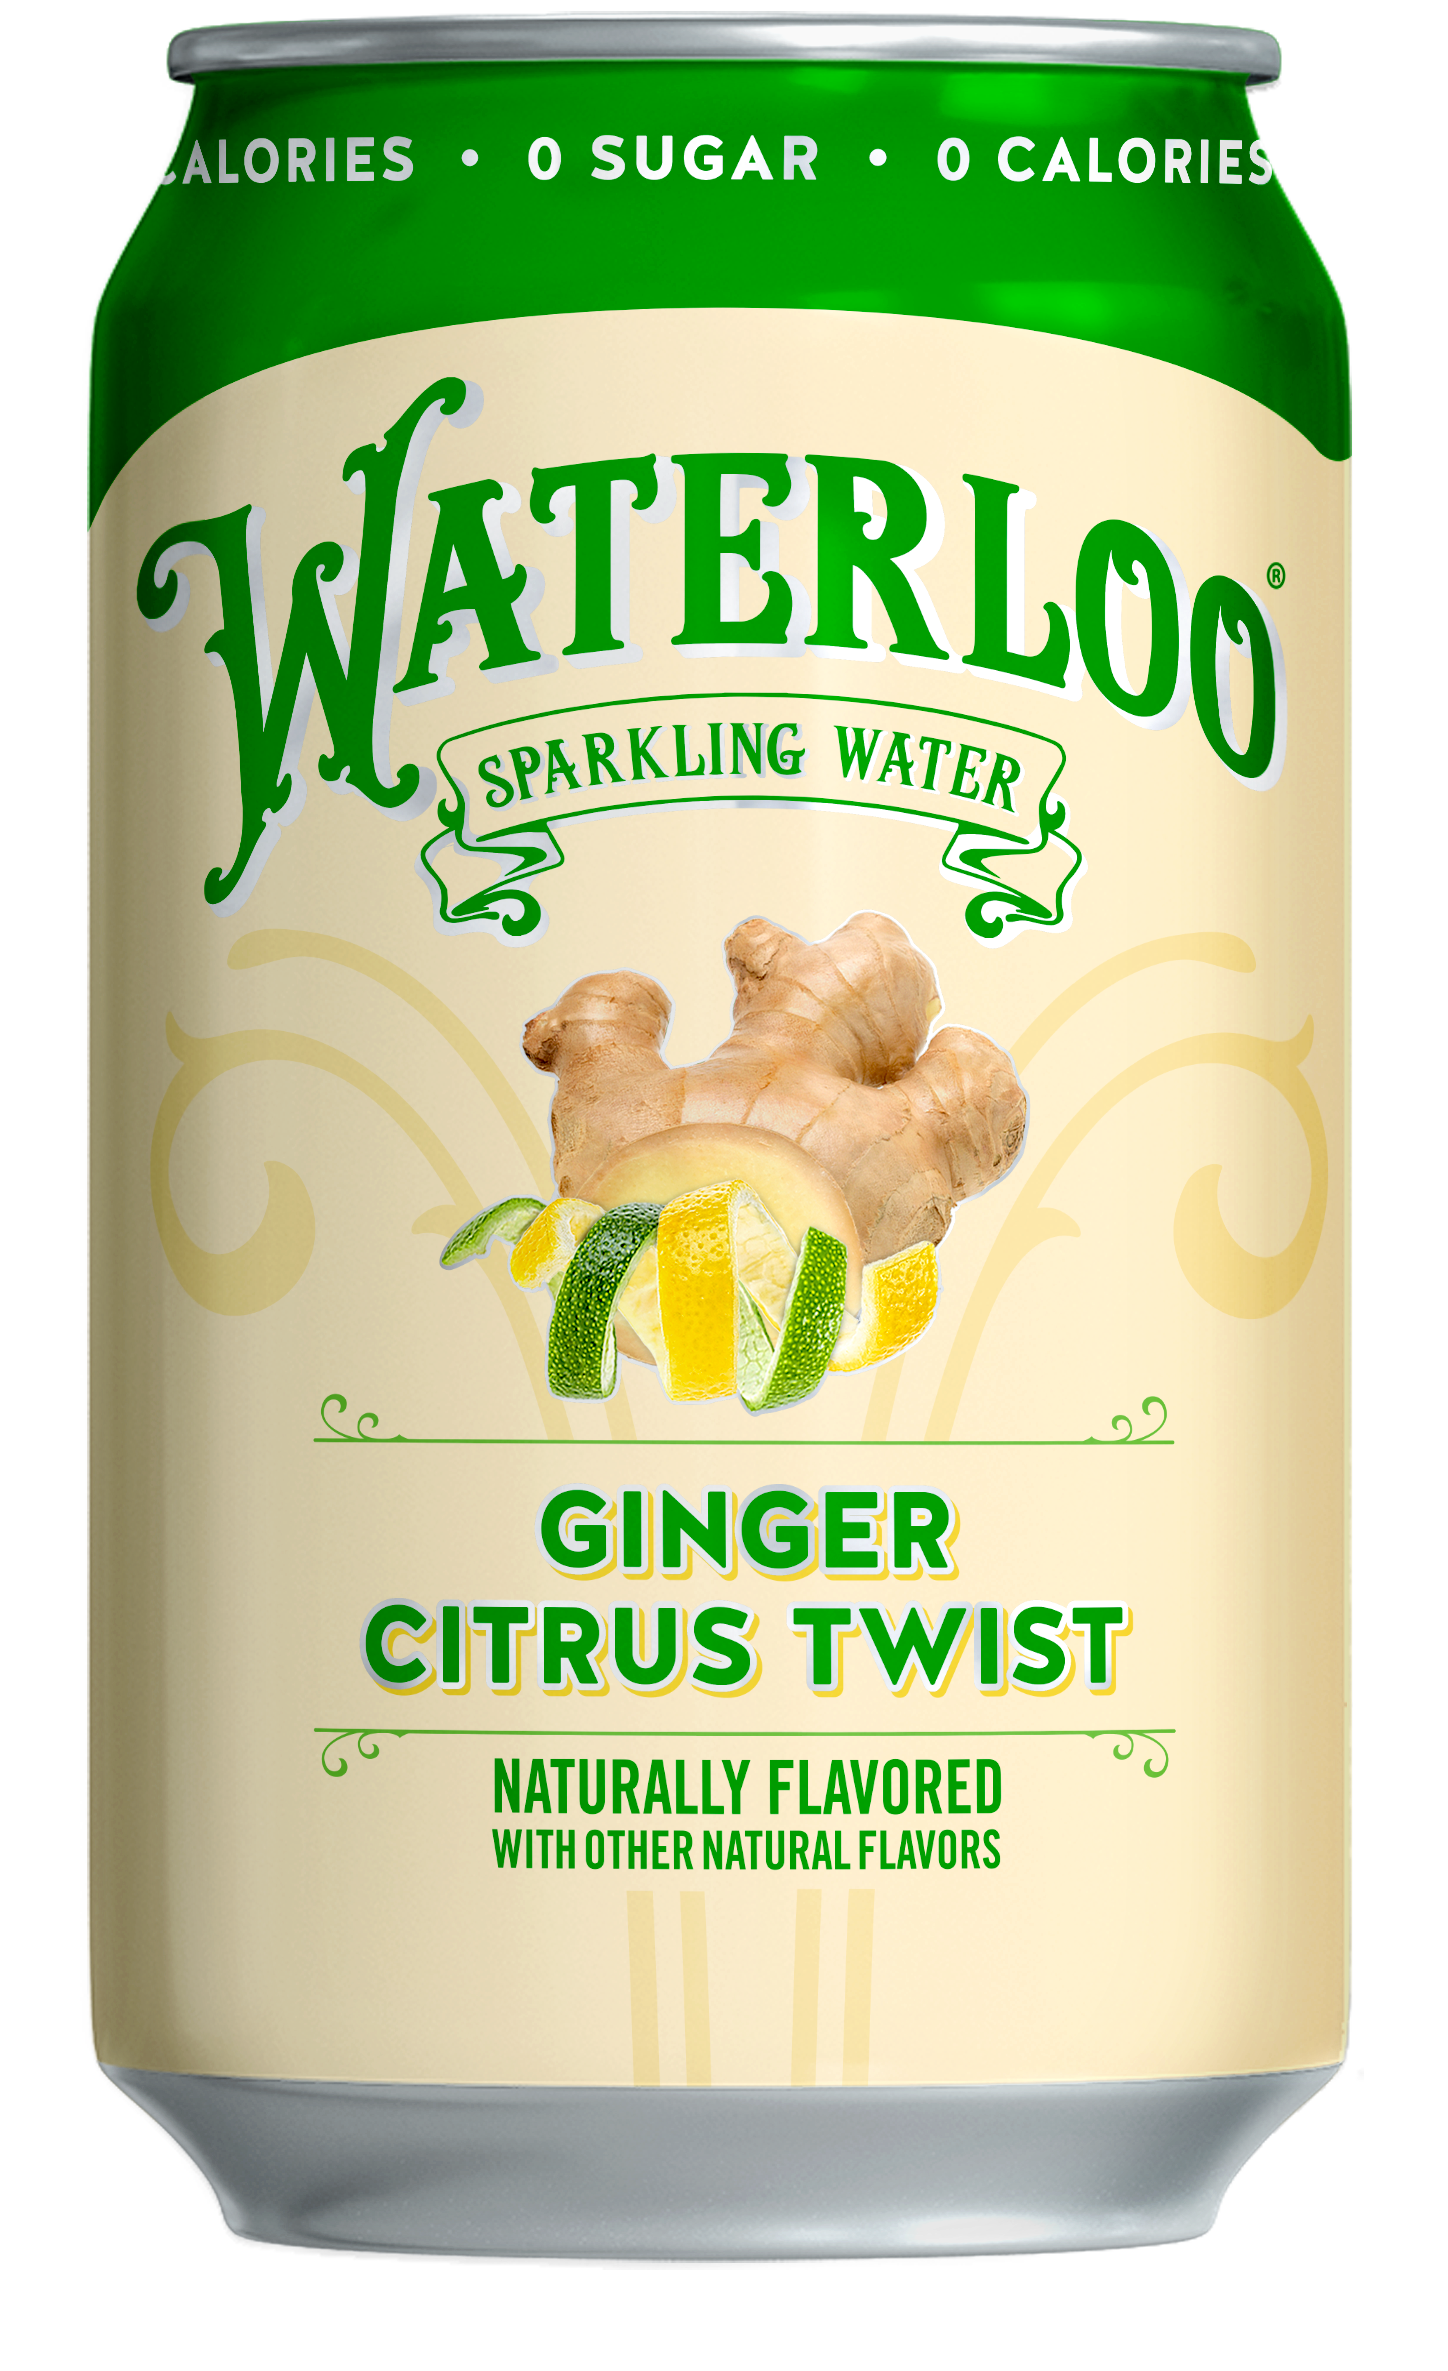 Waterloo Ginger Citrus Twist Sparkling Water 2 innerpacks per case 144.0 fl